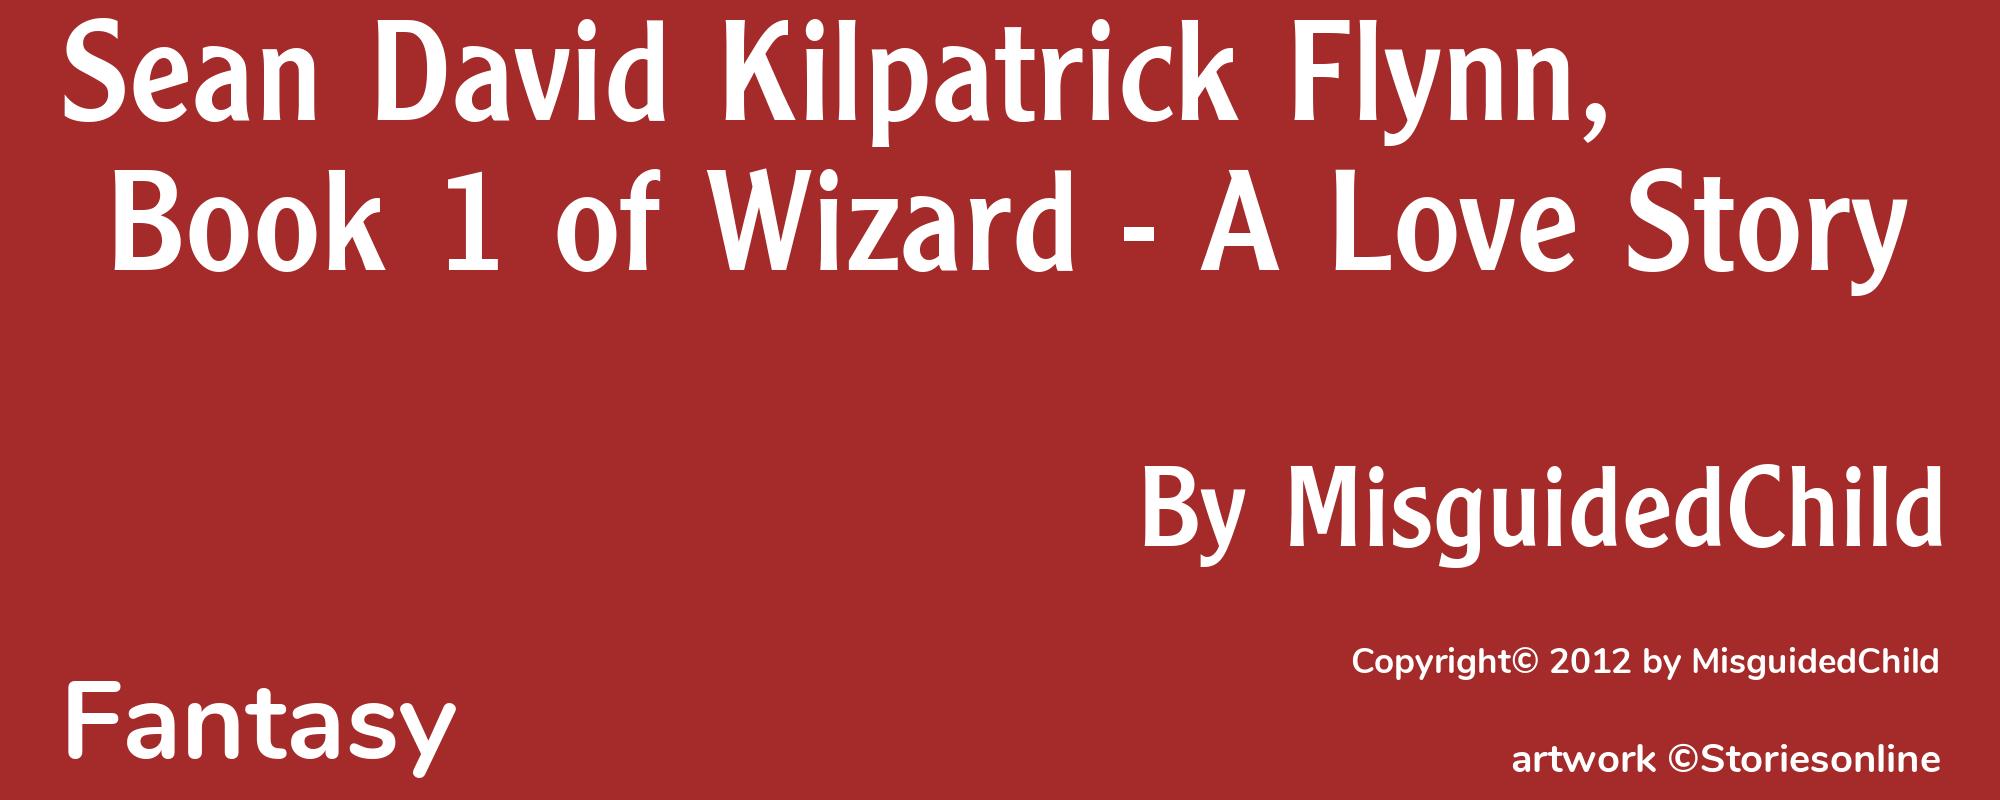 Sean David Kilpatrick Flynn, Book 1 of Wizard - A Love Story - Cover